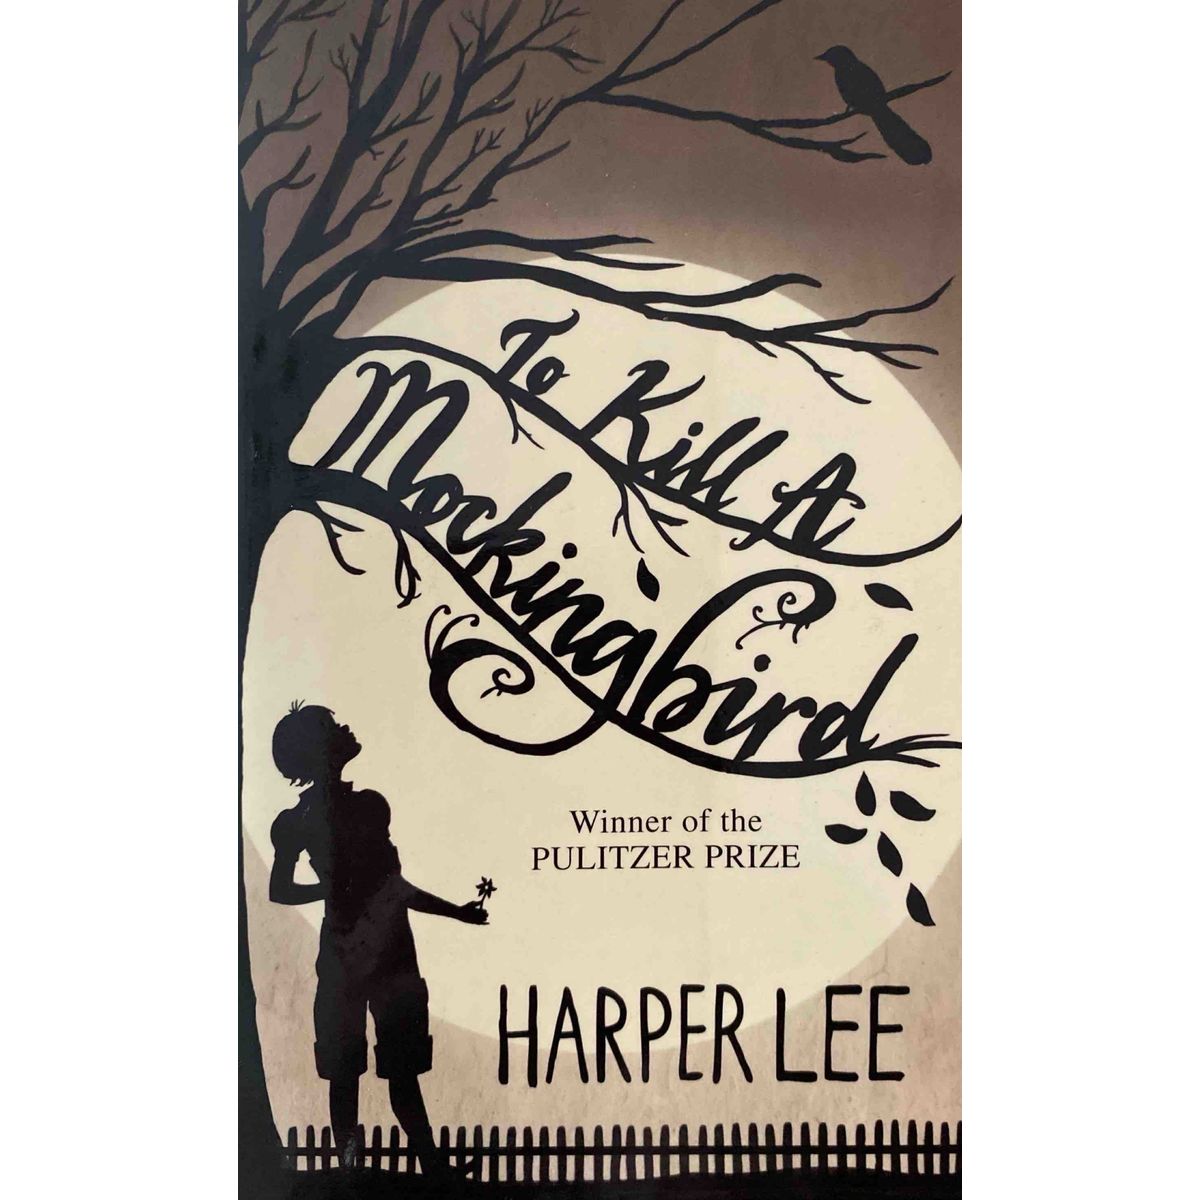 ISBN: 9781785150289 / 1785150286 - To Kill a Mockingbird by Harper Lee [1988]